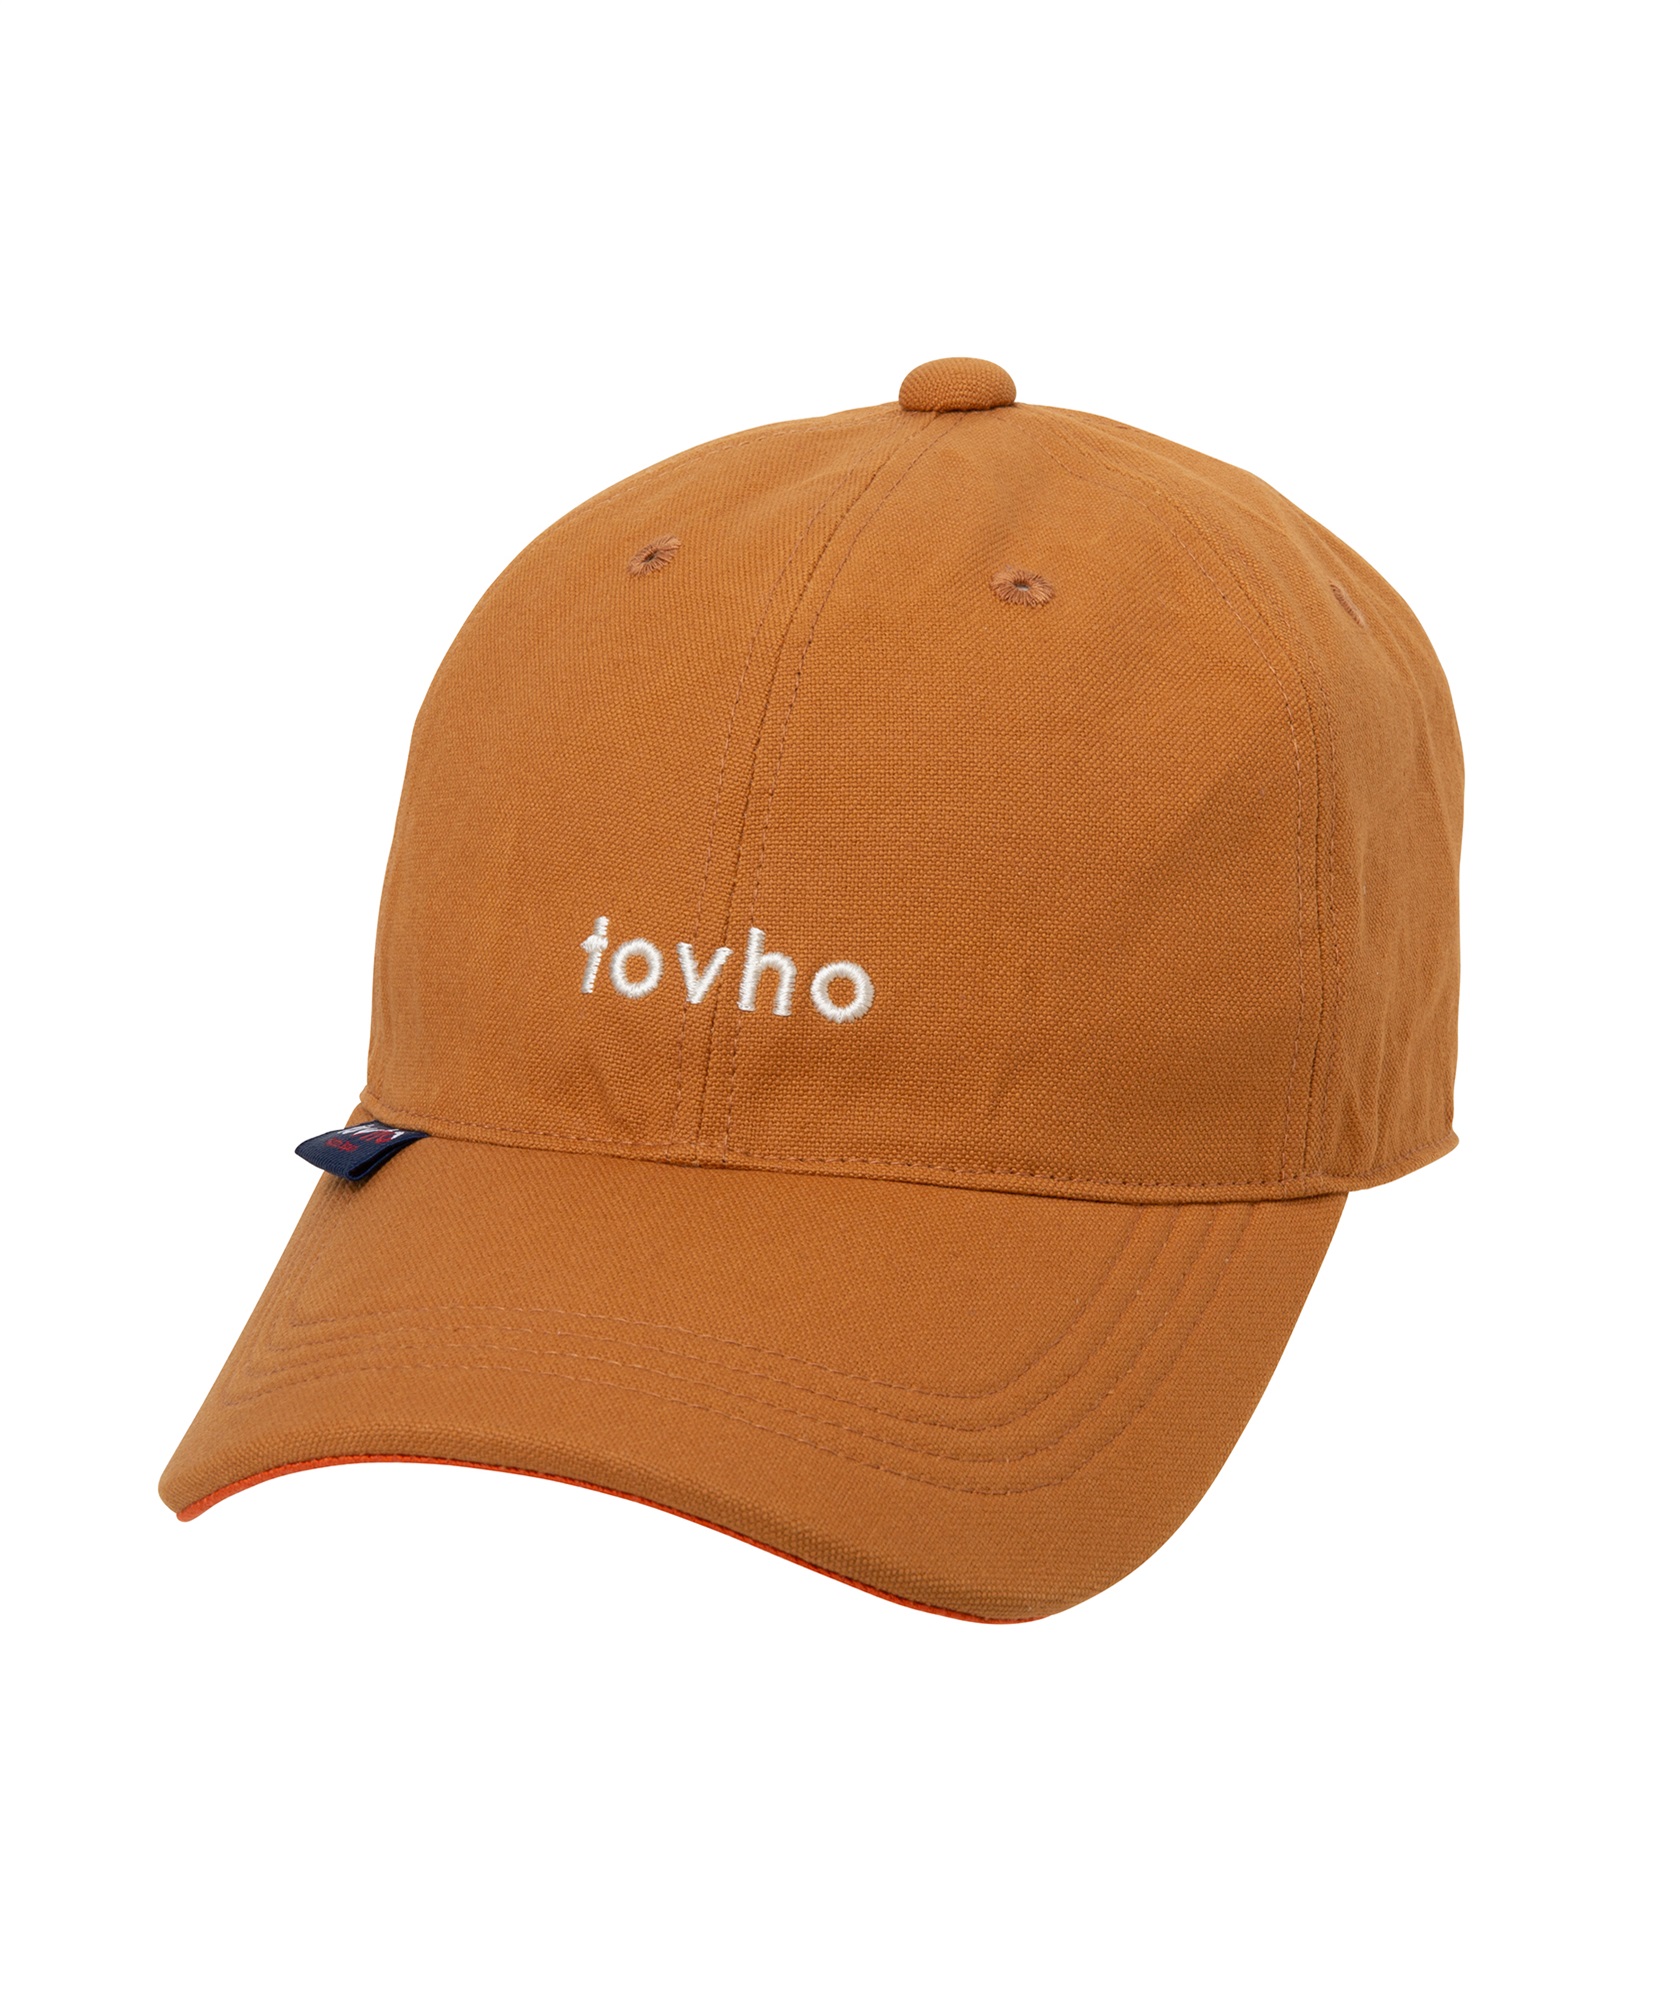 【tovho】ウォッシュド CAP(CAMEL-free)